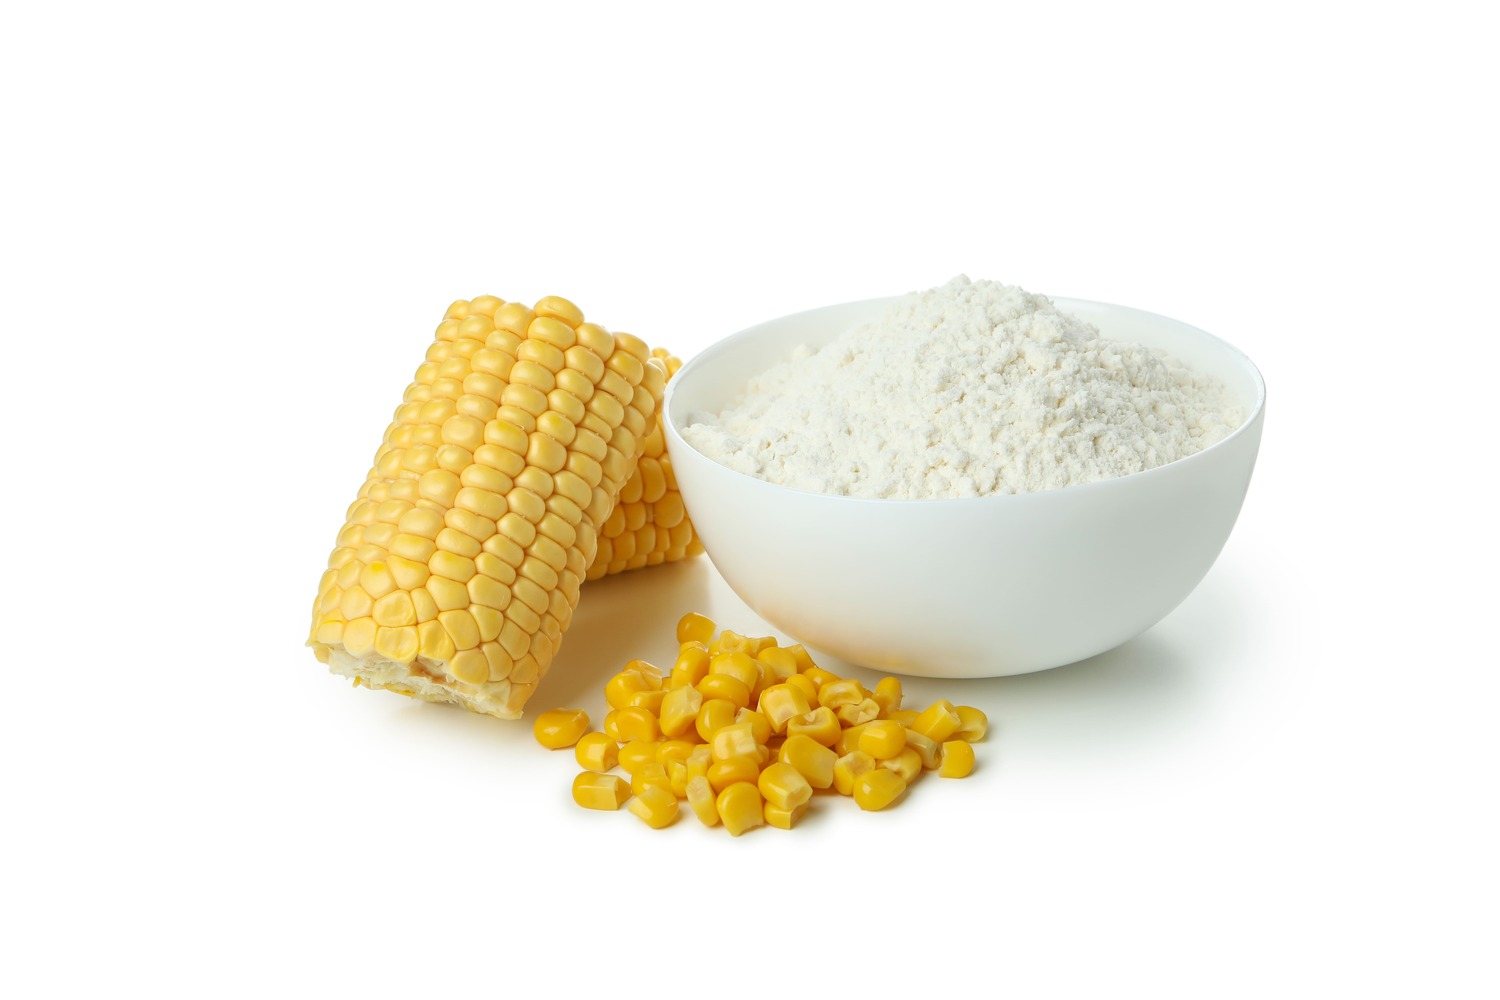 corn-and-flour-isolated-on-white-background-2021-09-04-04-11-15-utc-4-1-1.jpg